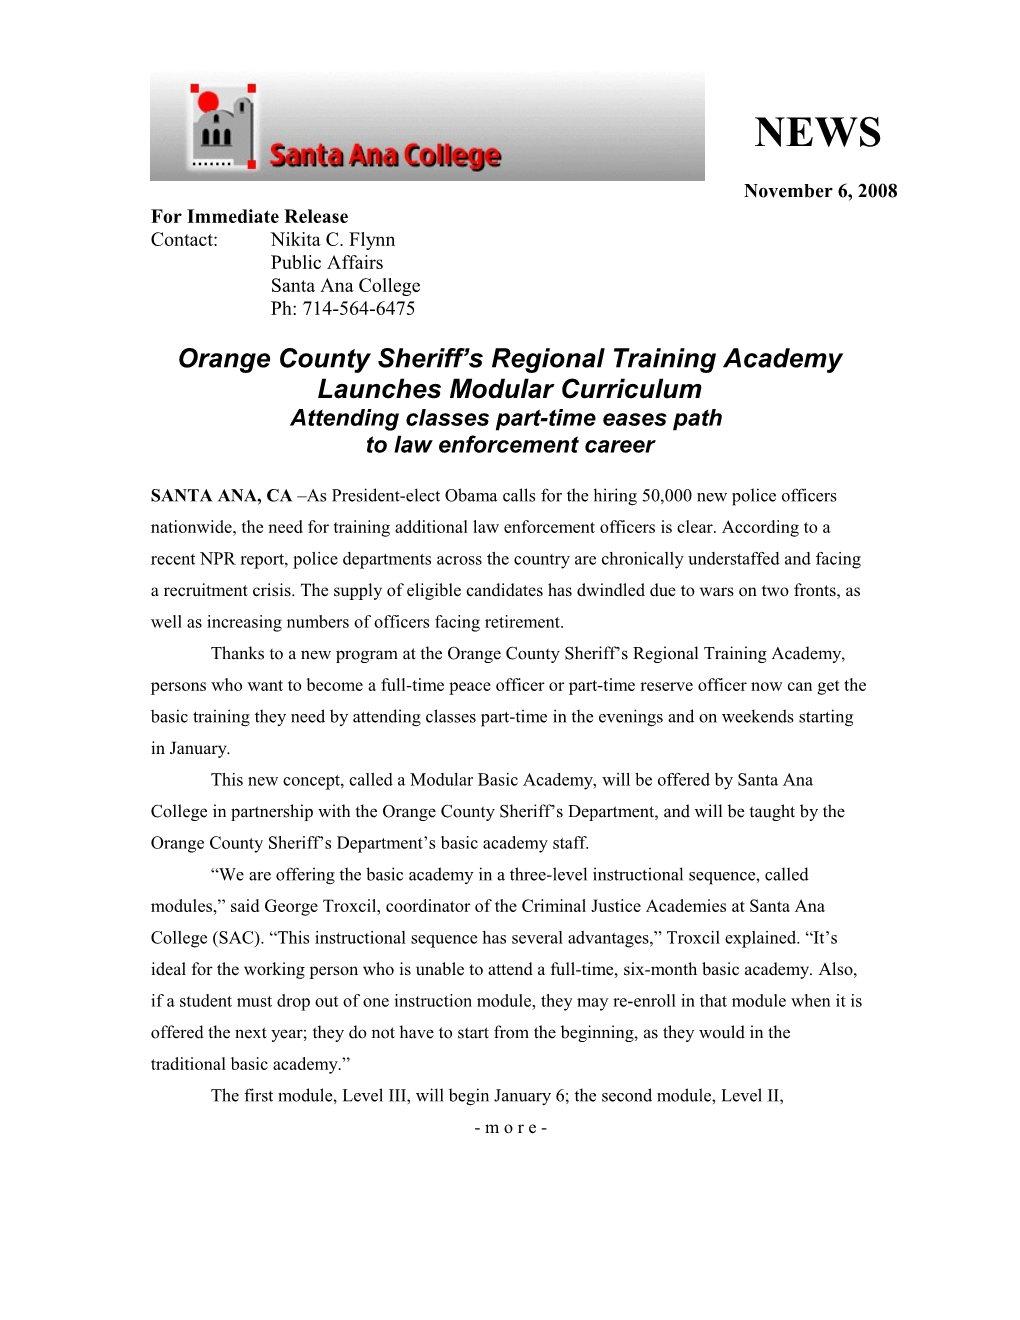 Orange County Sheriff S Regional Training Academy Launches Modular Curriculum